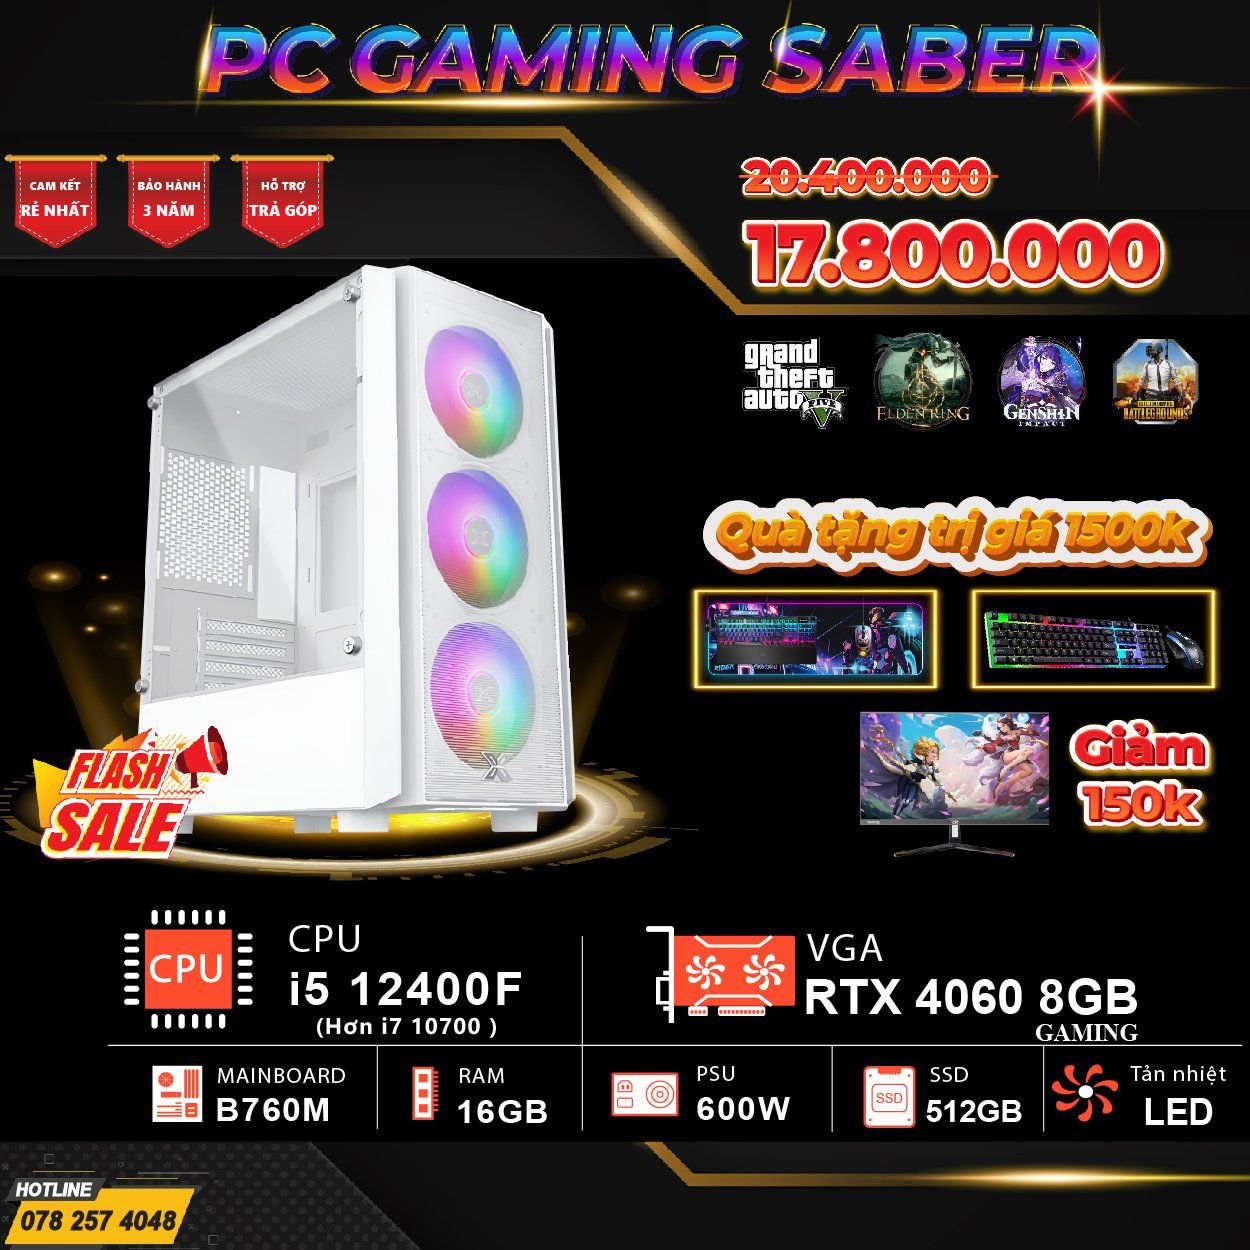  PC GAMING SABER - FULL NEW 100% 